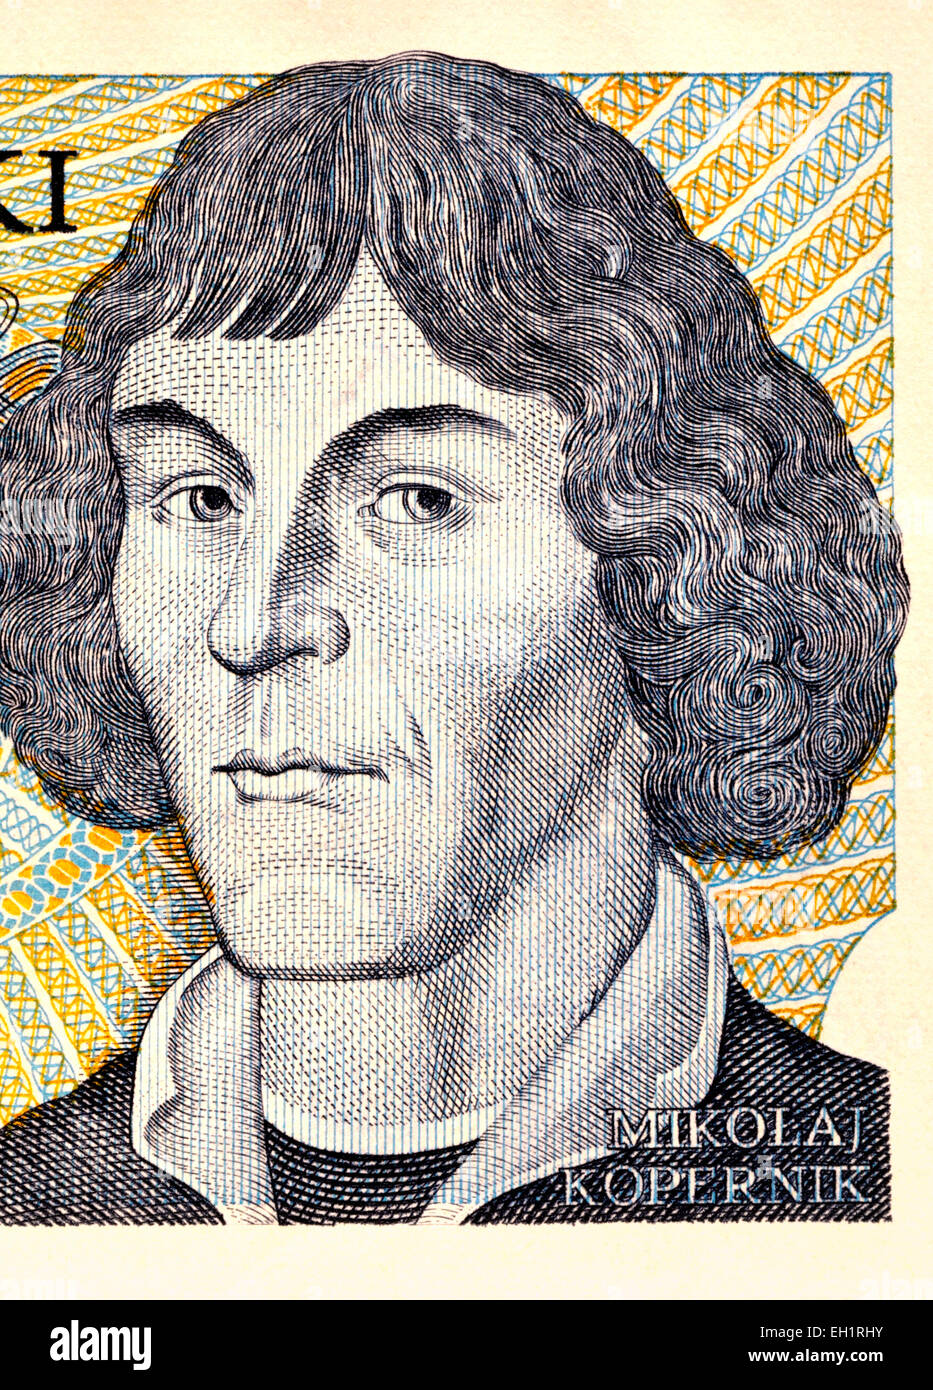 Detail from a Polish 1000zl banknote showing portrait of Mikolaj Kopernik / Nicolaus Copernicus (1473-1543) Stock Photo